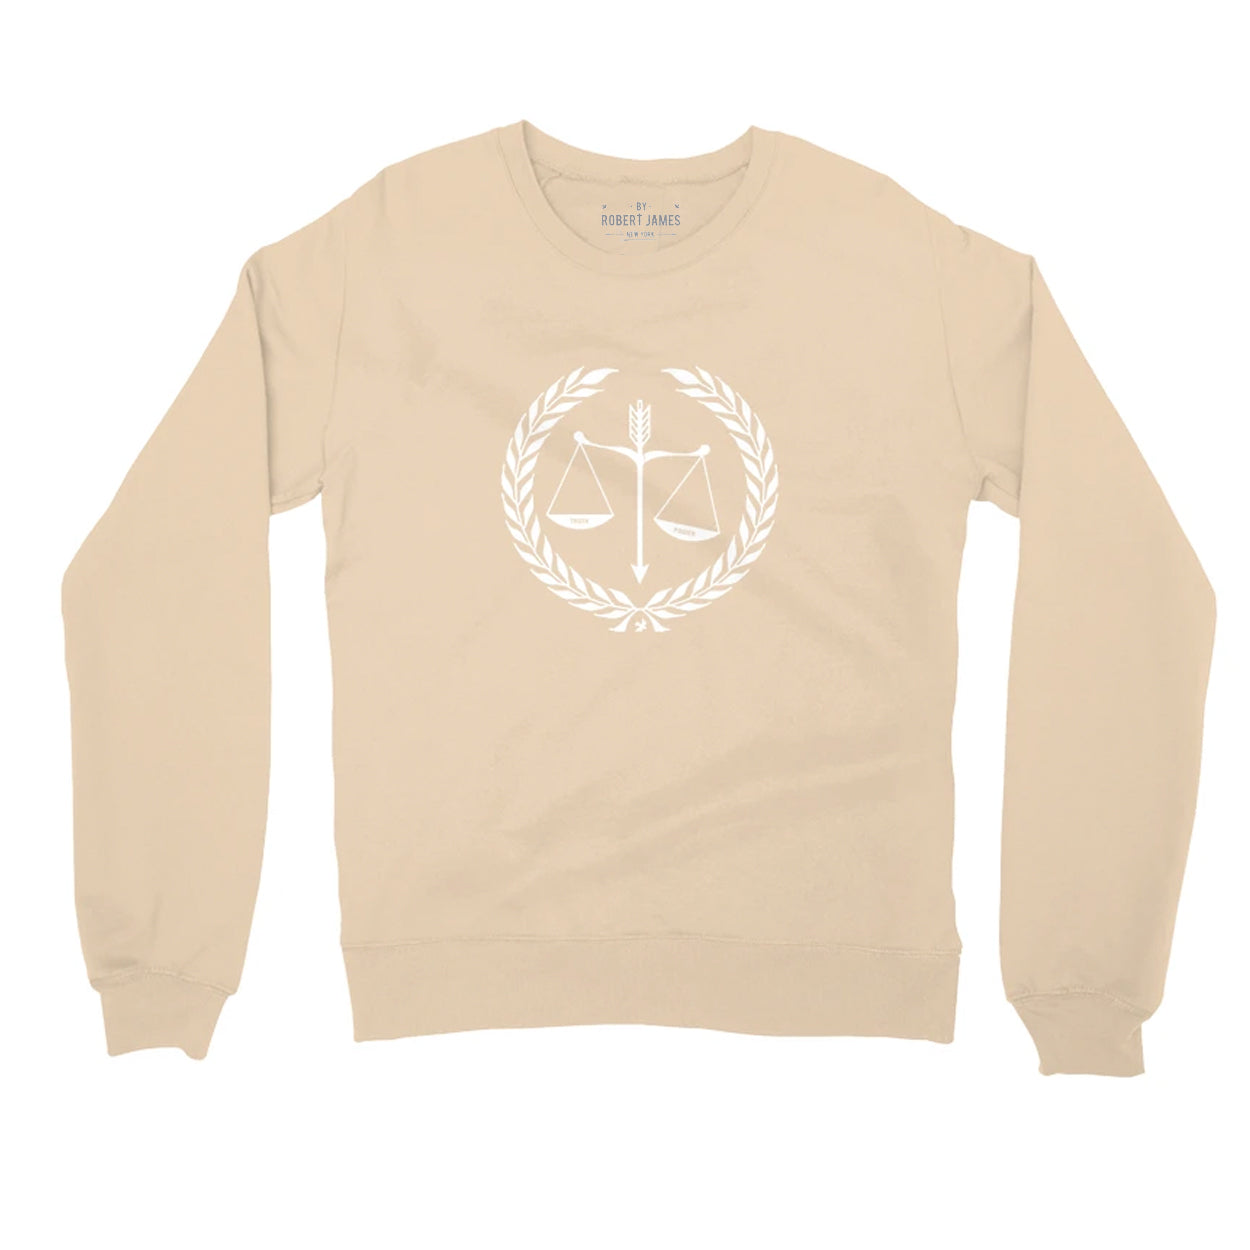 TRUTH IN JUSTICE // Sweatshirts